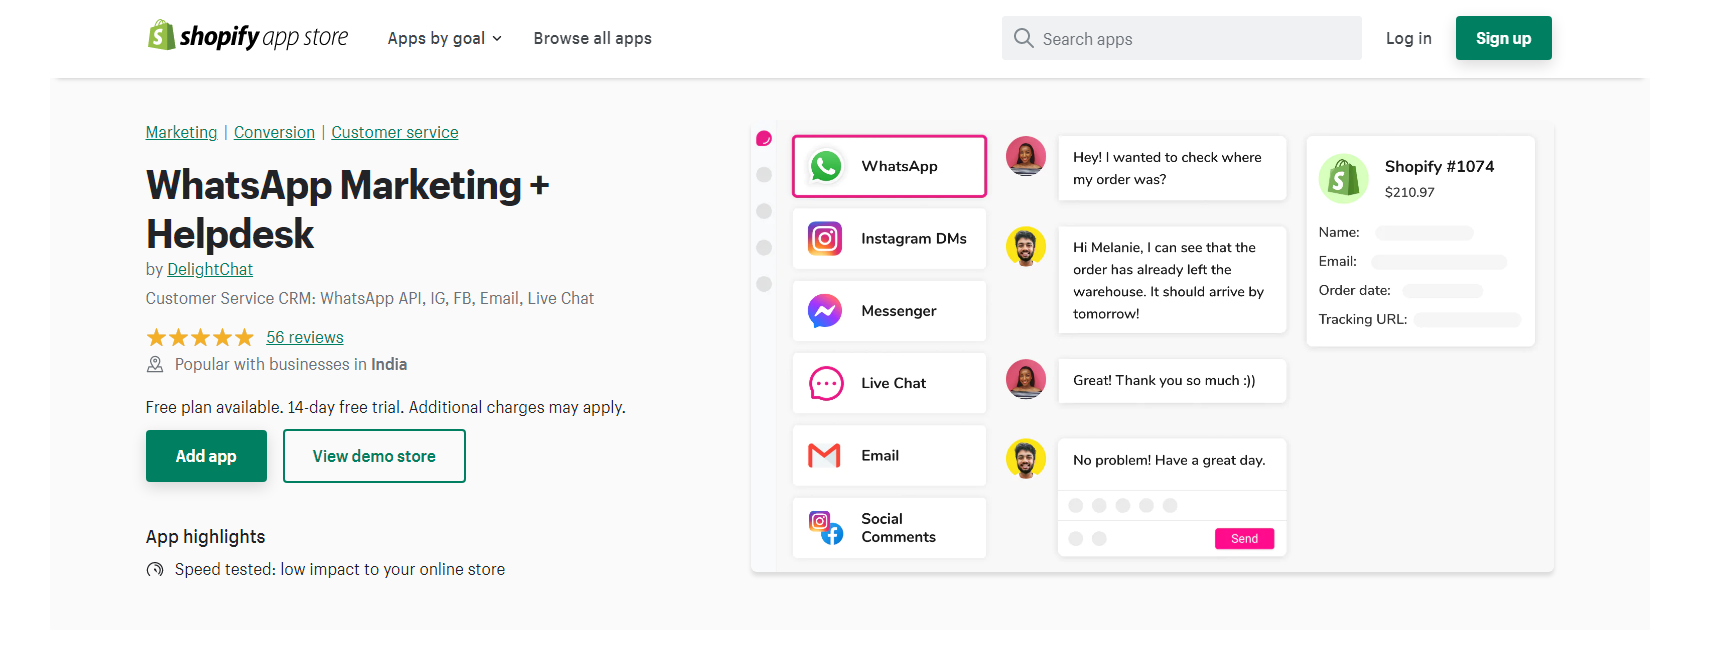 Whatsapp Marketing - Shopify Live Chat app